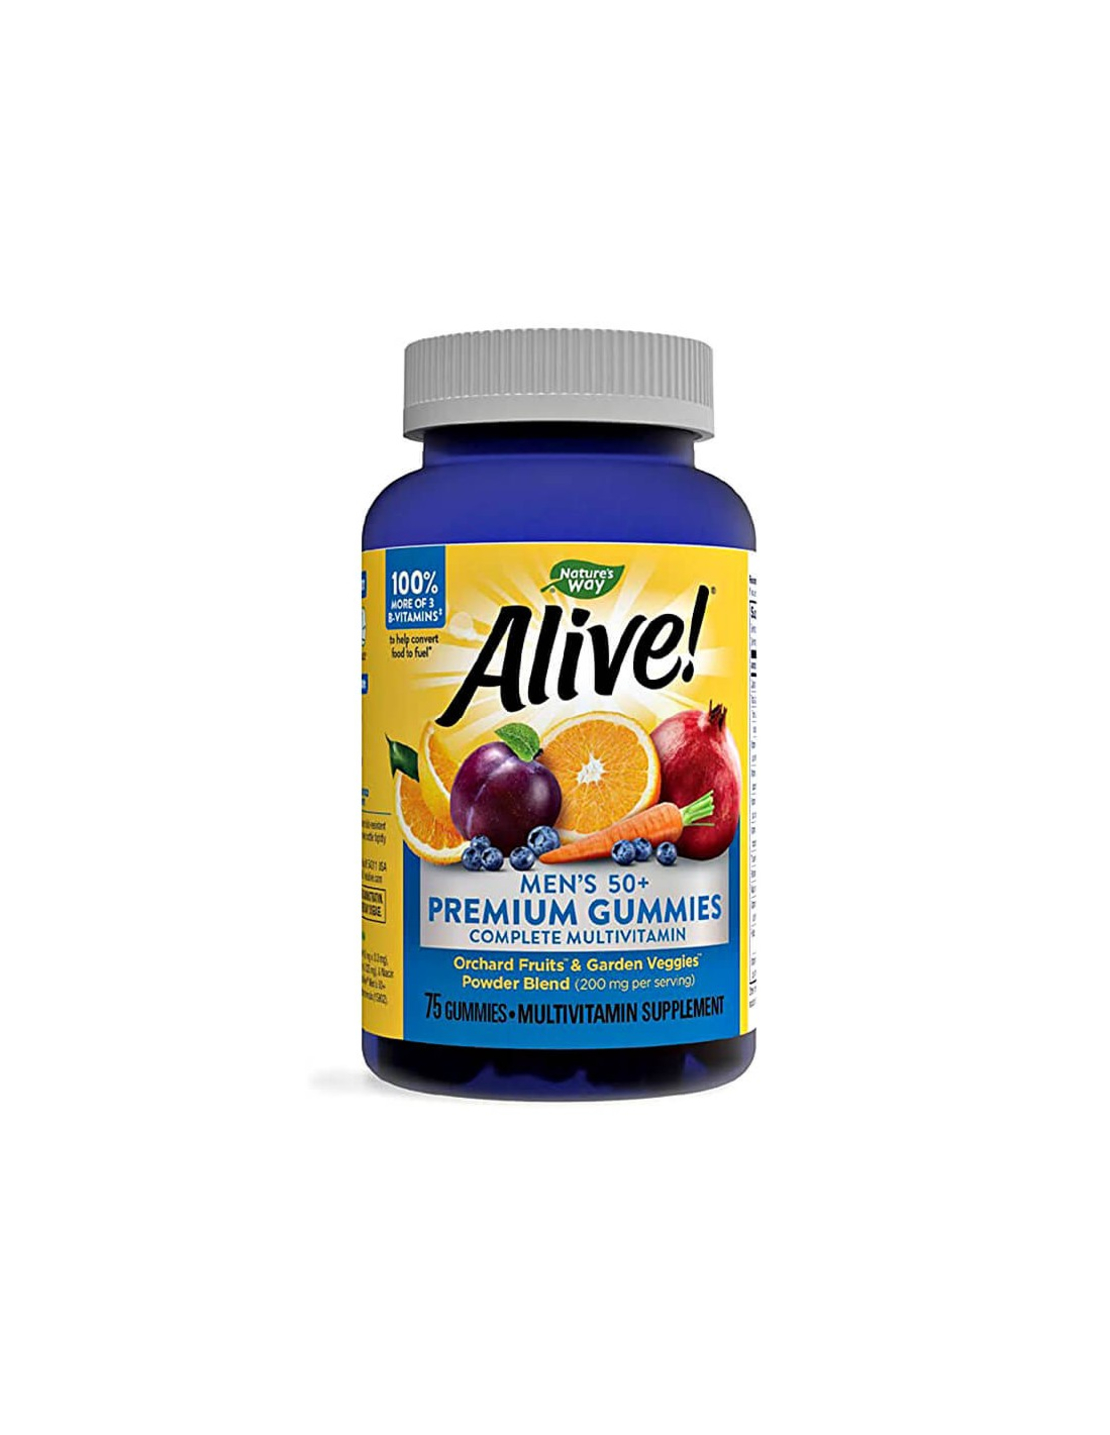 Alive! Men’s 50+ Premium Gummies Multivitamin / Алайв! Премиум мултивитамини за мъже 50+, 75 желирани таблетки Nature’s Way